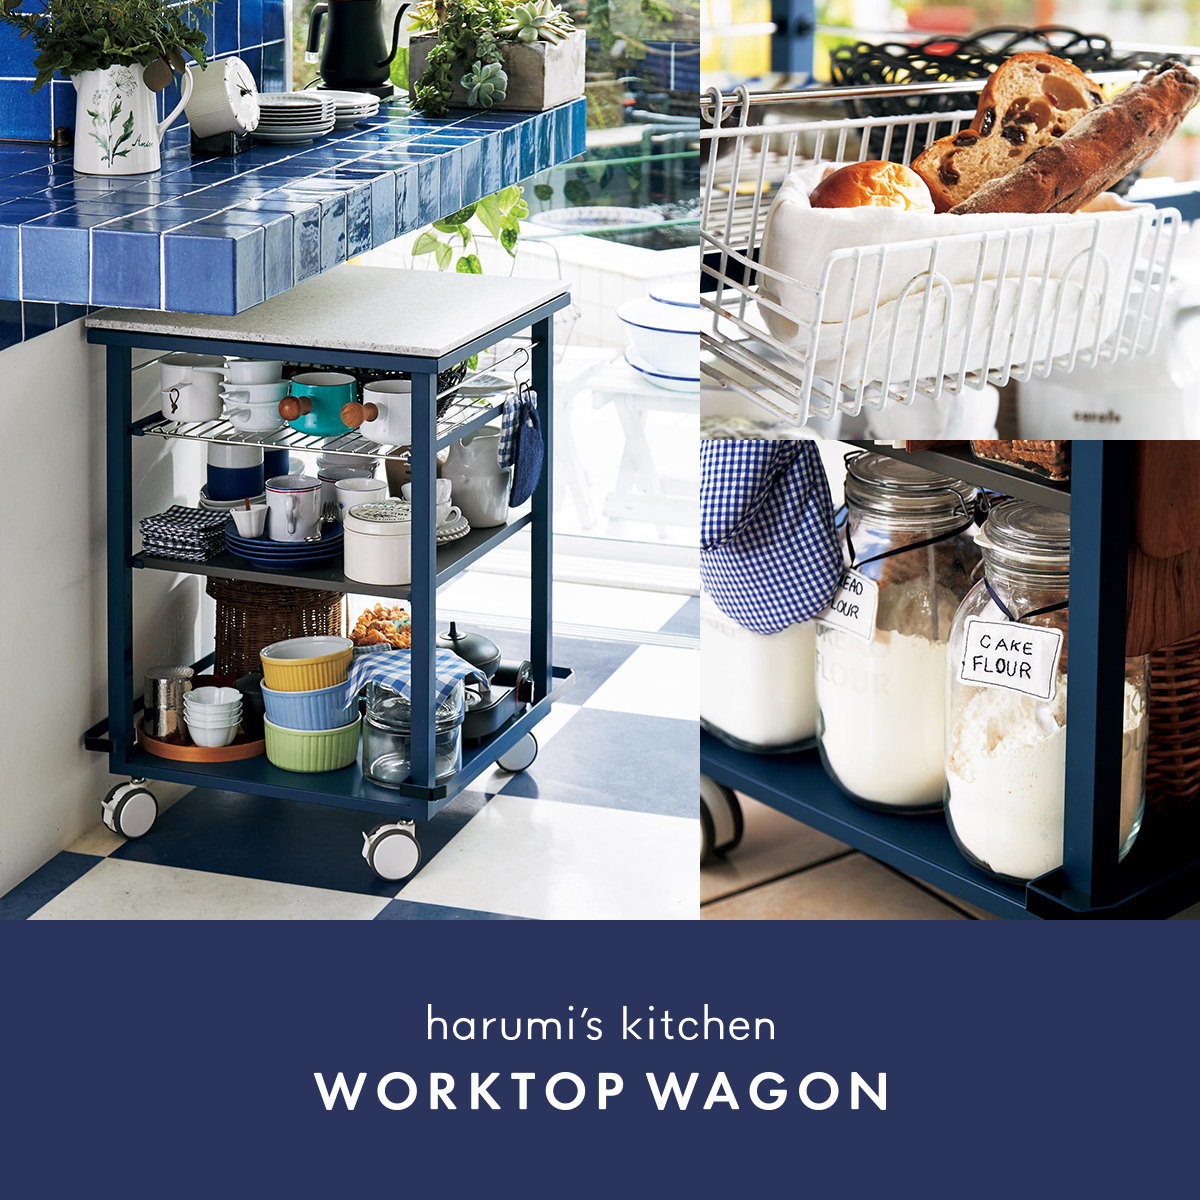 harumi's kitchen - WORKTOP WAGON